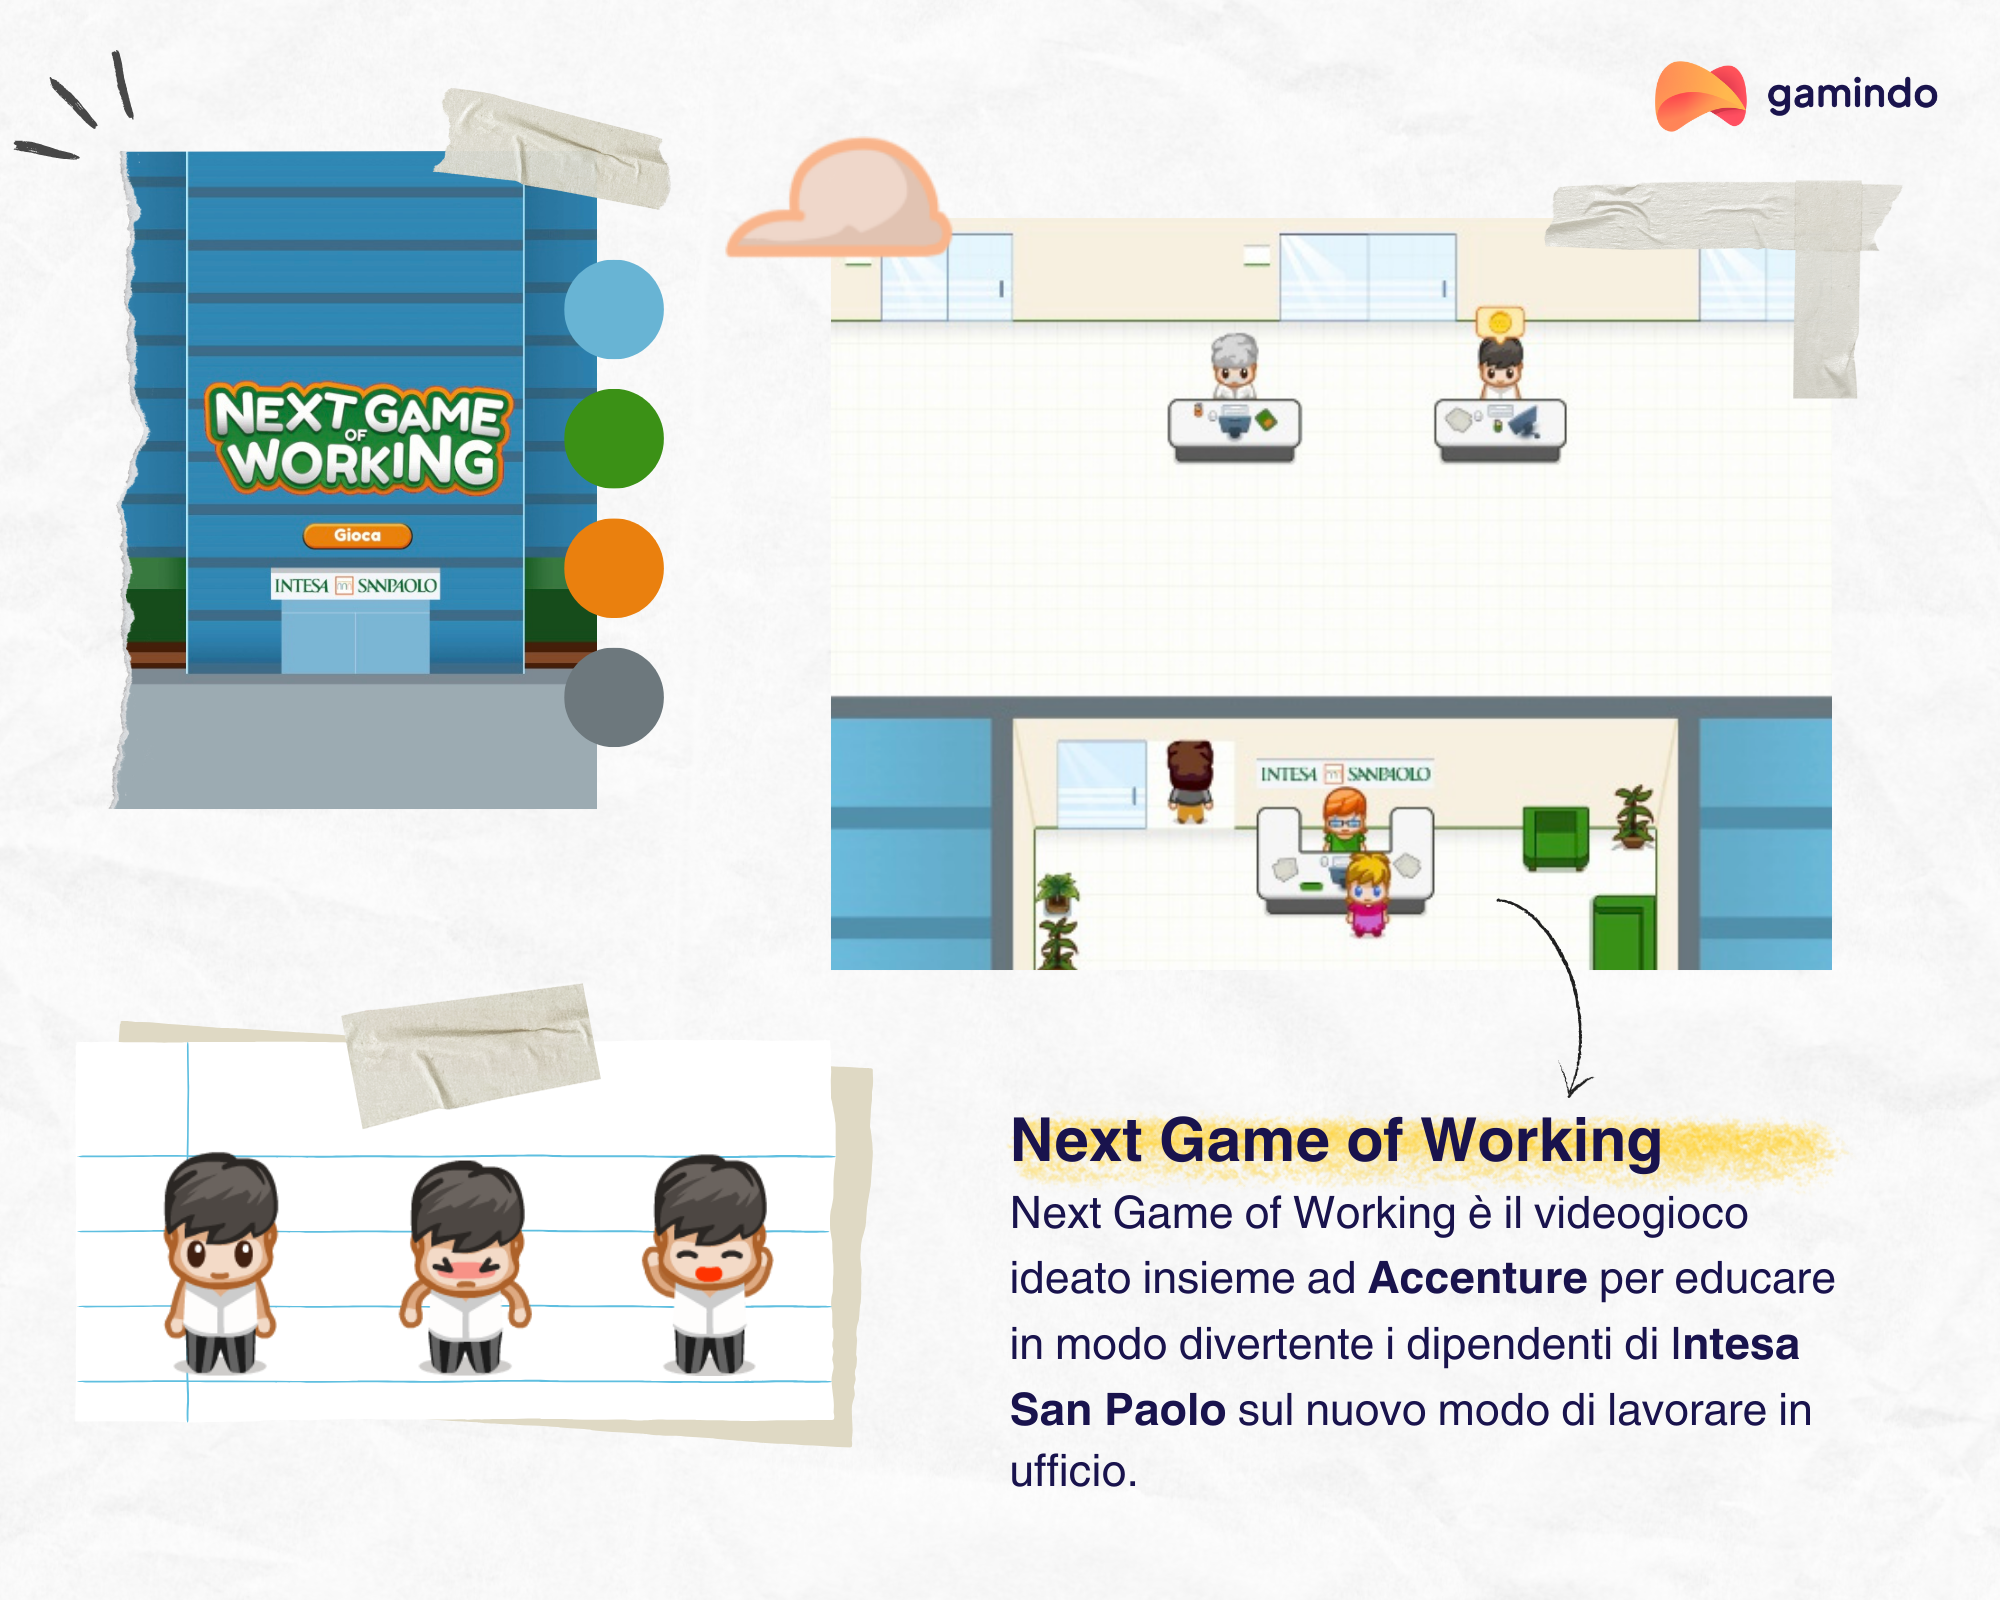 Moodboard-next-game-of-working-intesa-san-paolo-gamindo